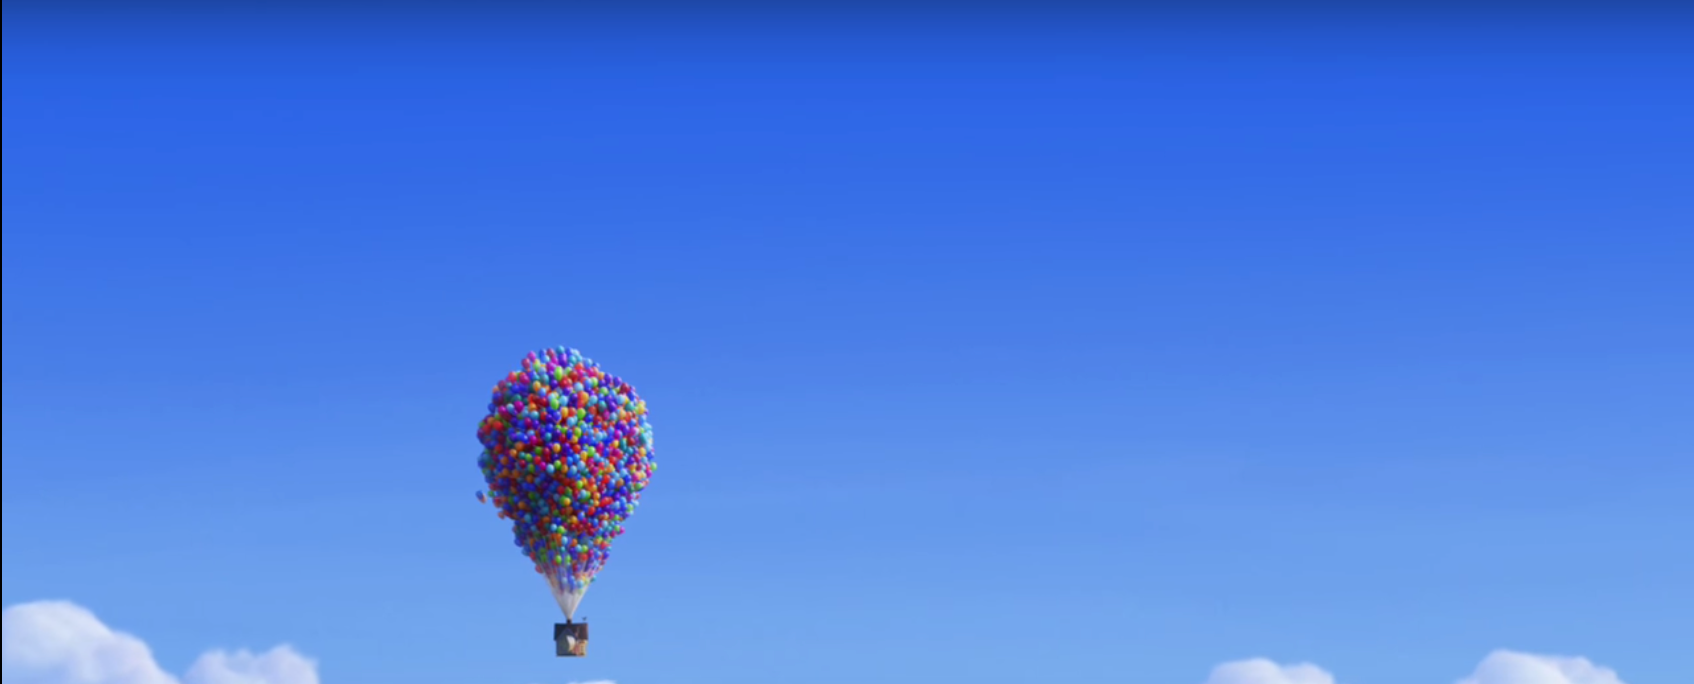 Giant Party Balloon to land rocket